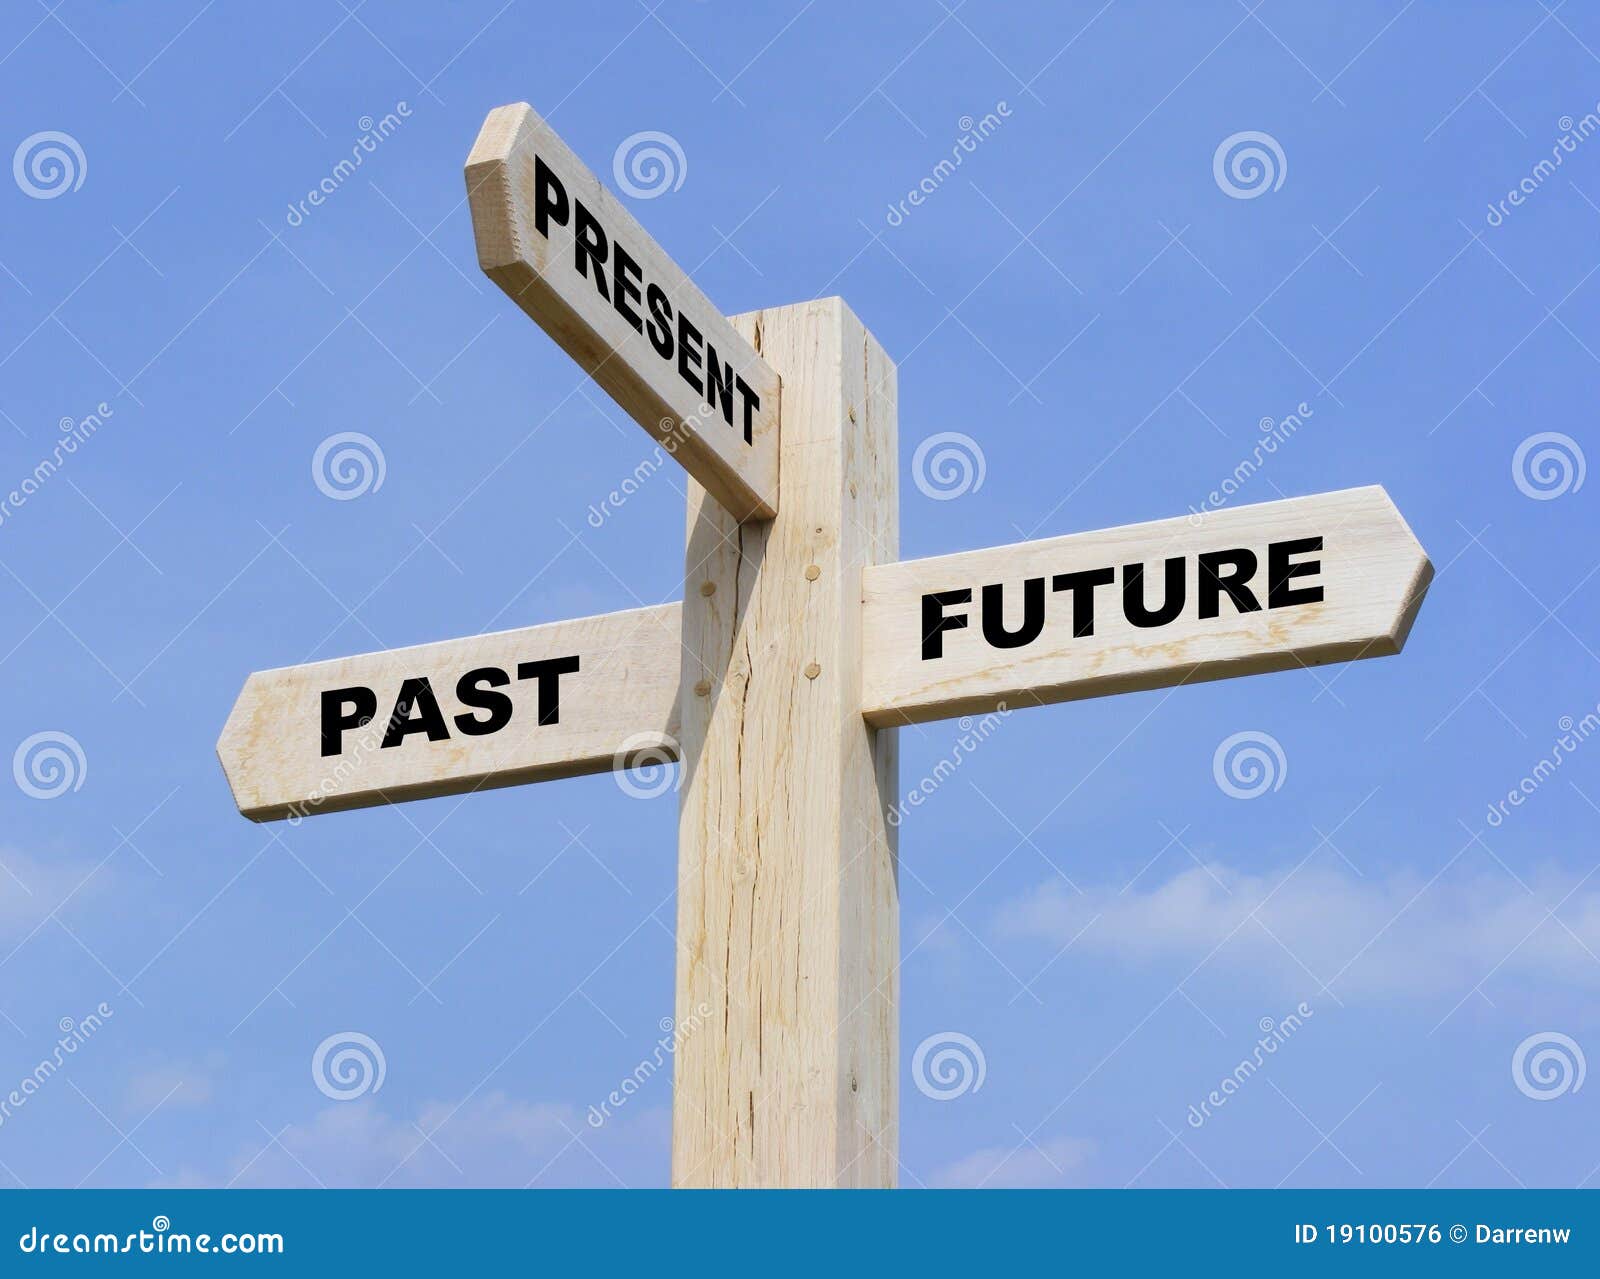 past present future